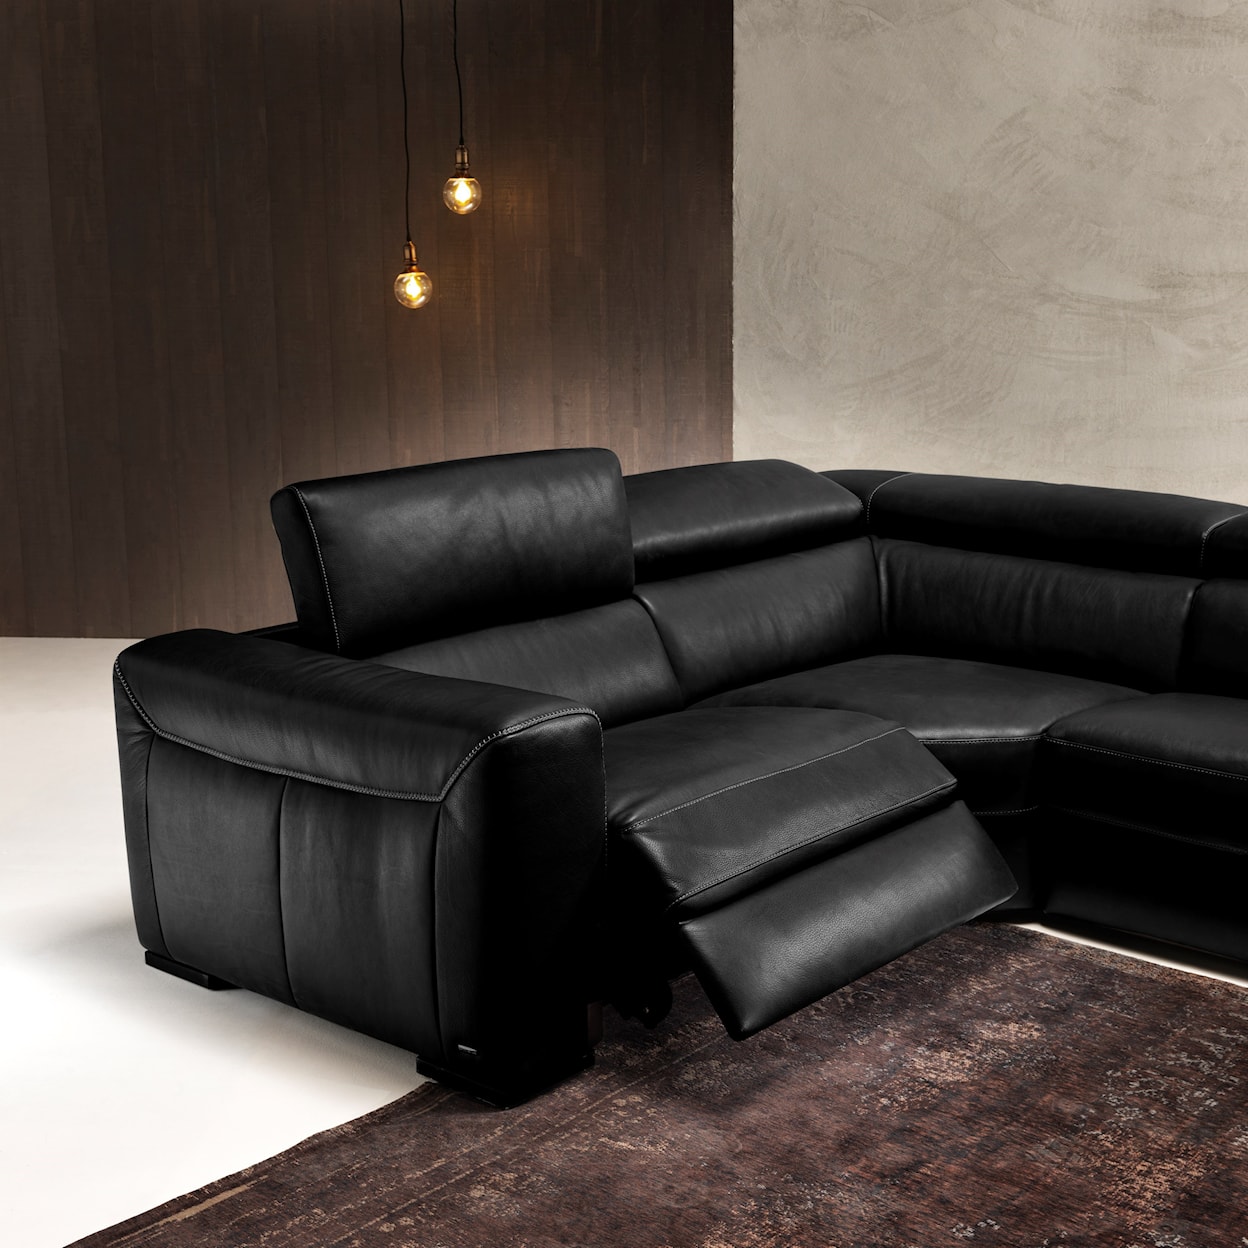 Natuzzi Editions 100% Italian Leather Sectional